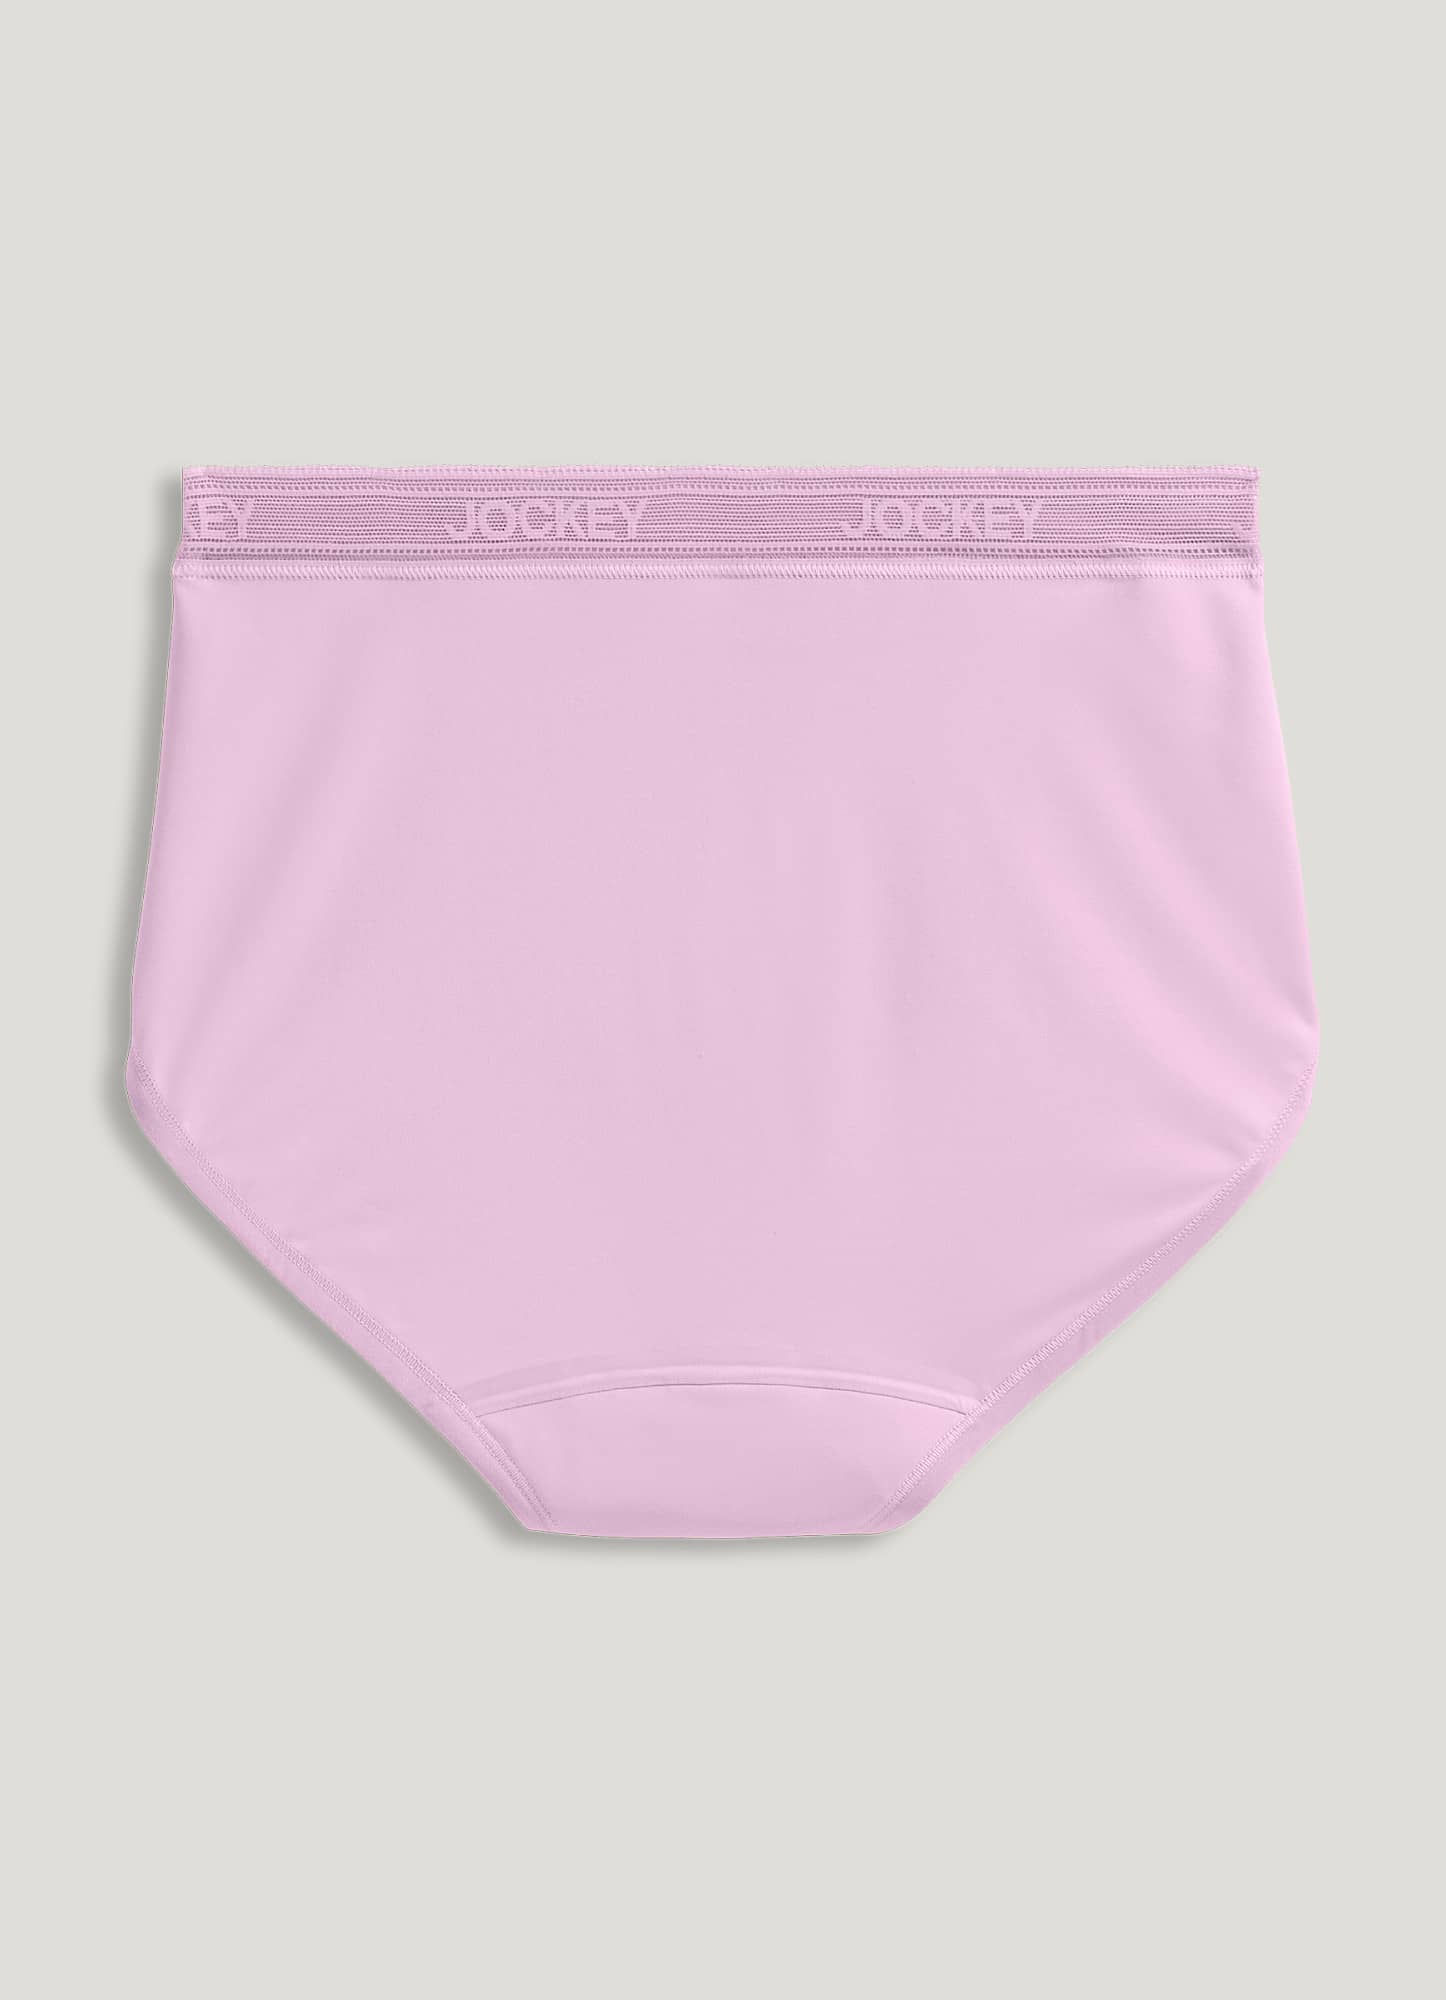 Jockey Women's Underwear Worry Free Microfiber Moderate Absorbency Bikini,  Battleship Grey, XS